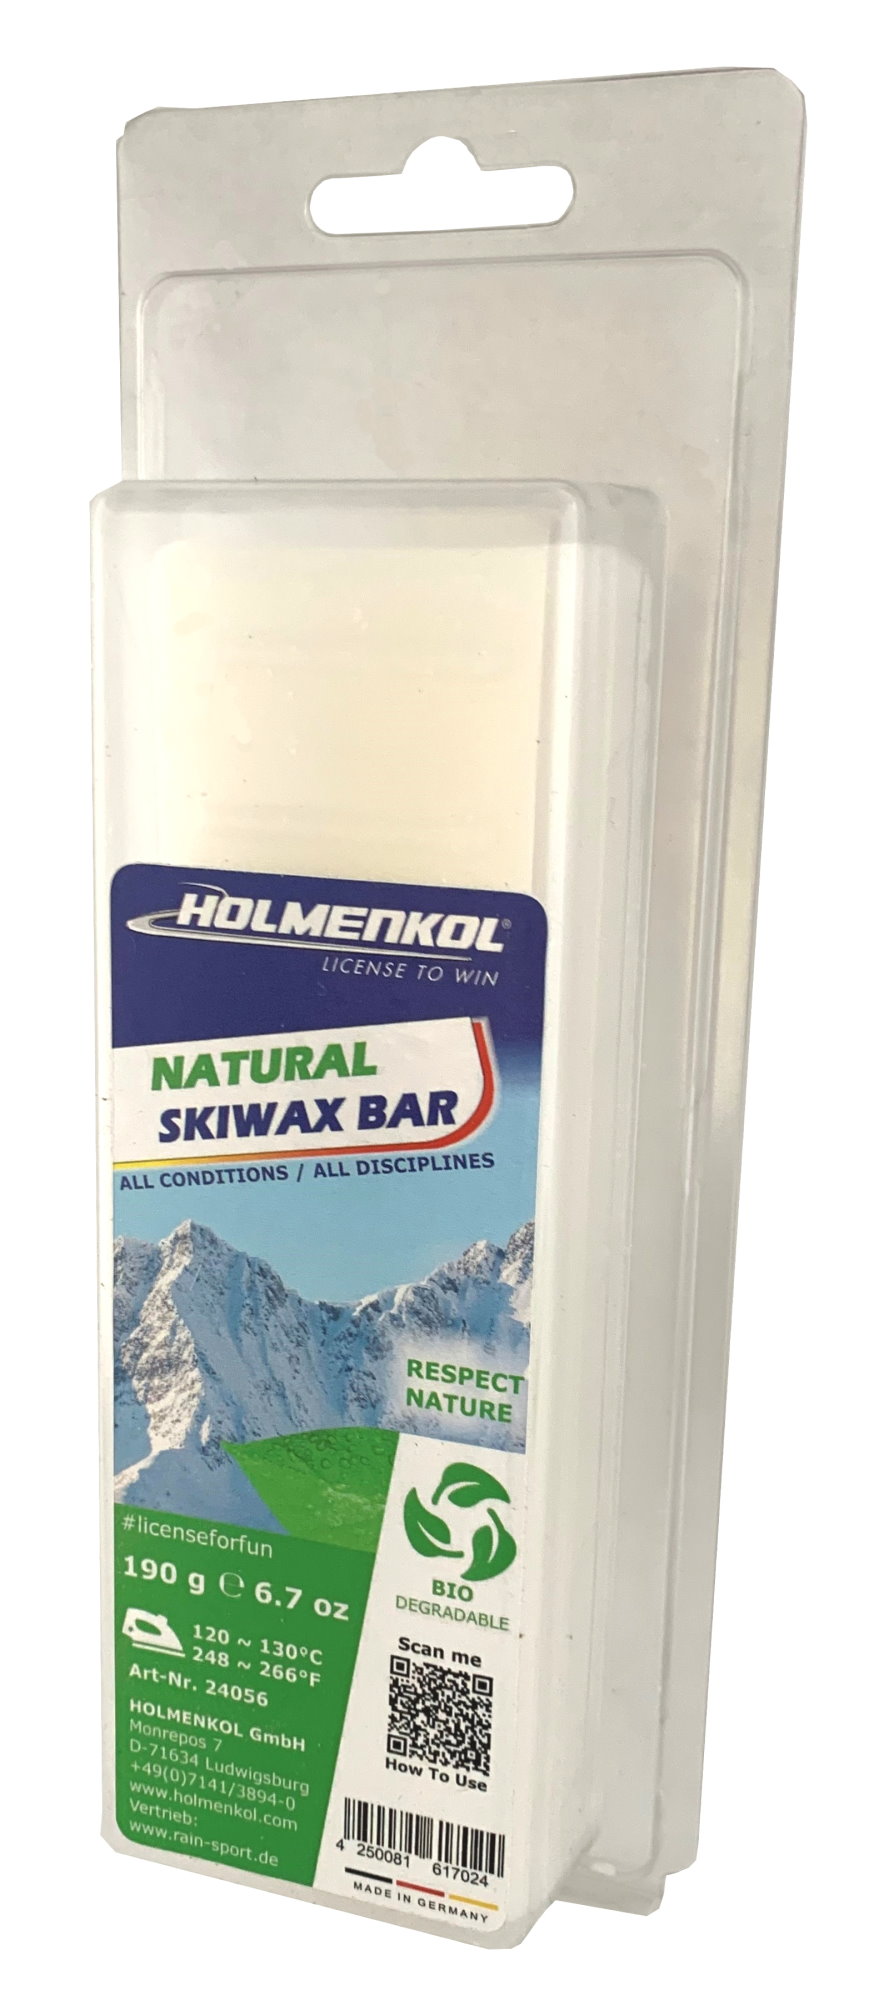 HOLMENKOL Universal-Skiwax "Natural Wax Bar" - 190g